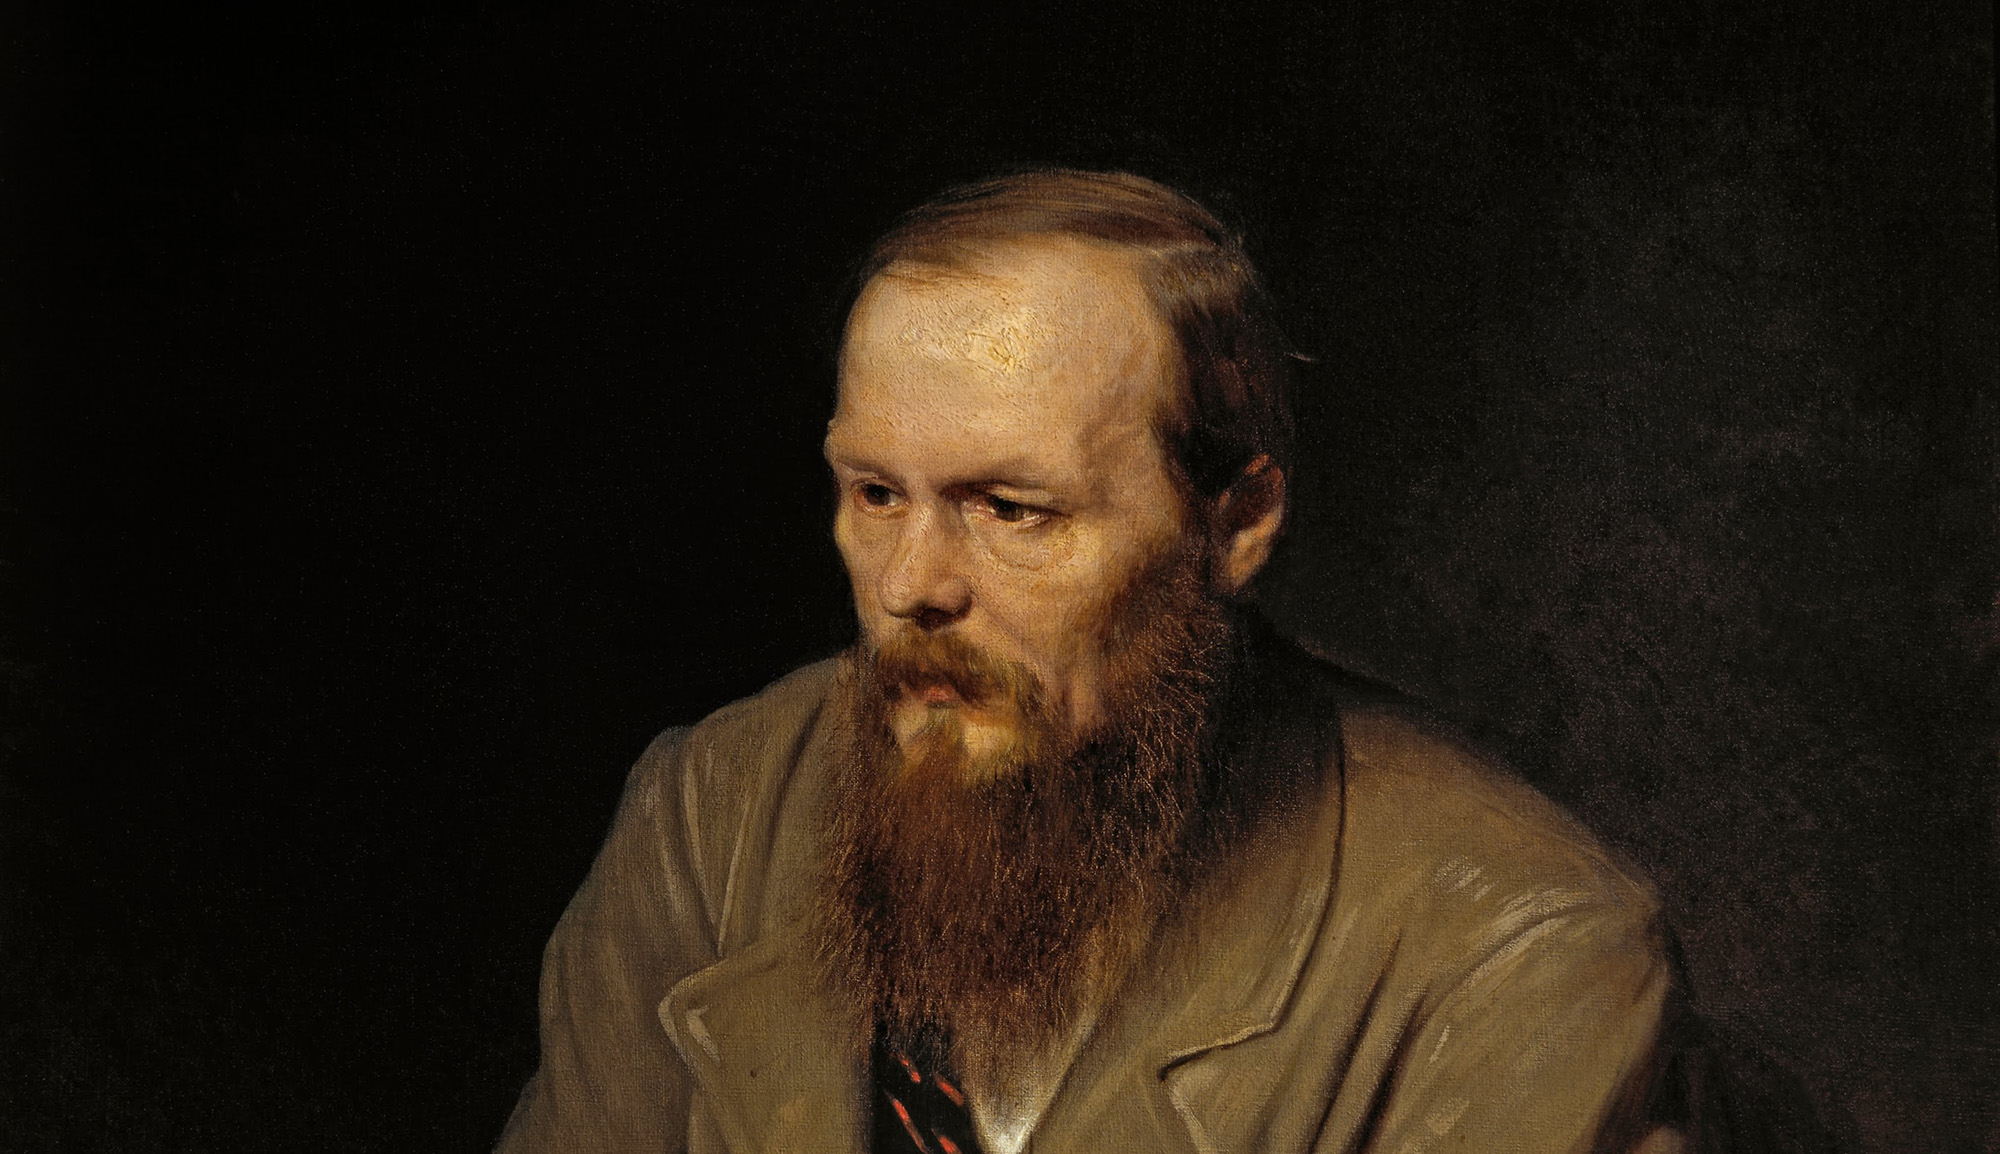 From a portrait of Fyodor Dostoevsky by Vasily Perov, 1872. Wikipedia.
